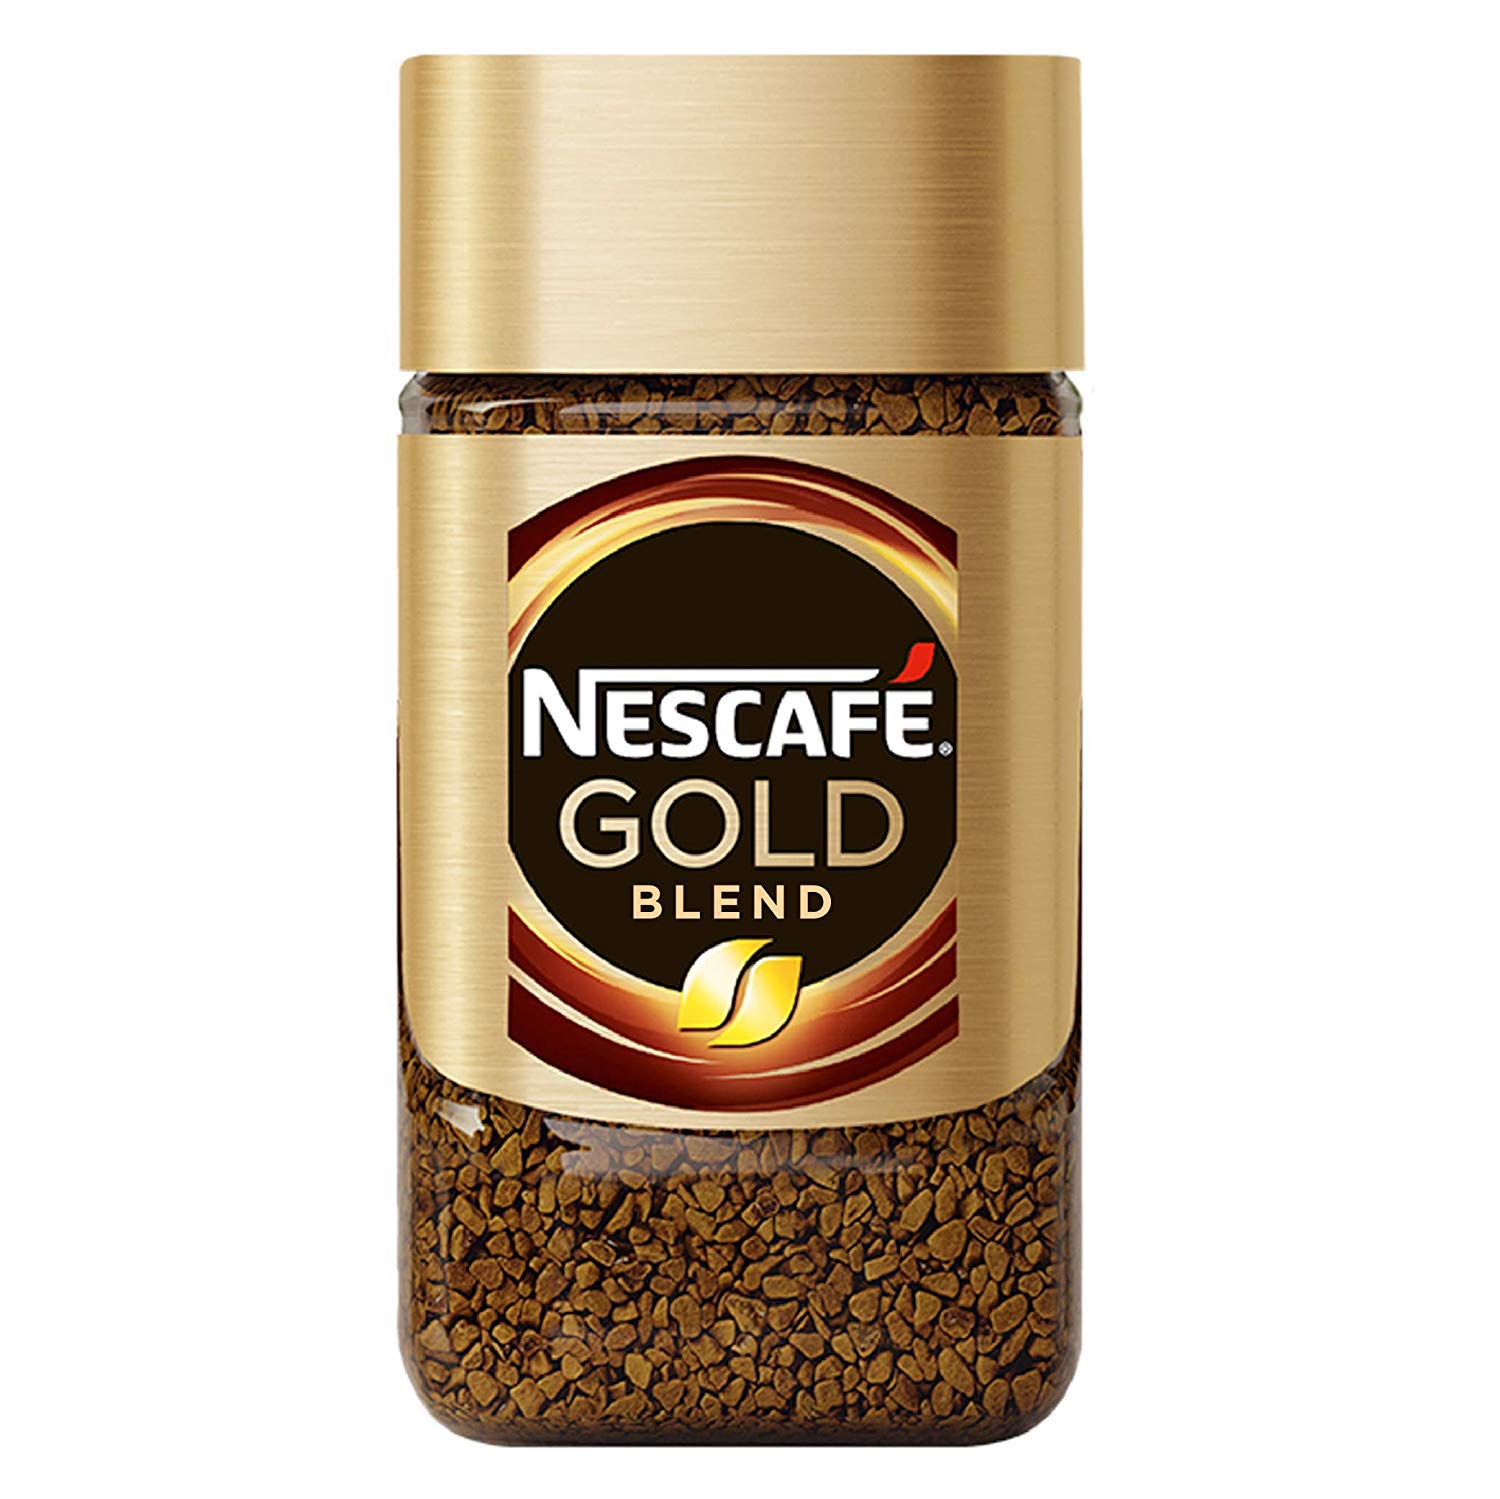 Nescafe Gold Blend Coffee